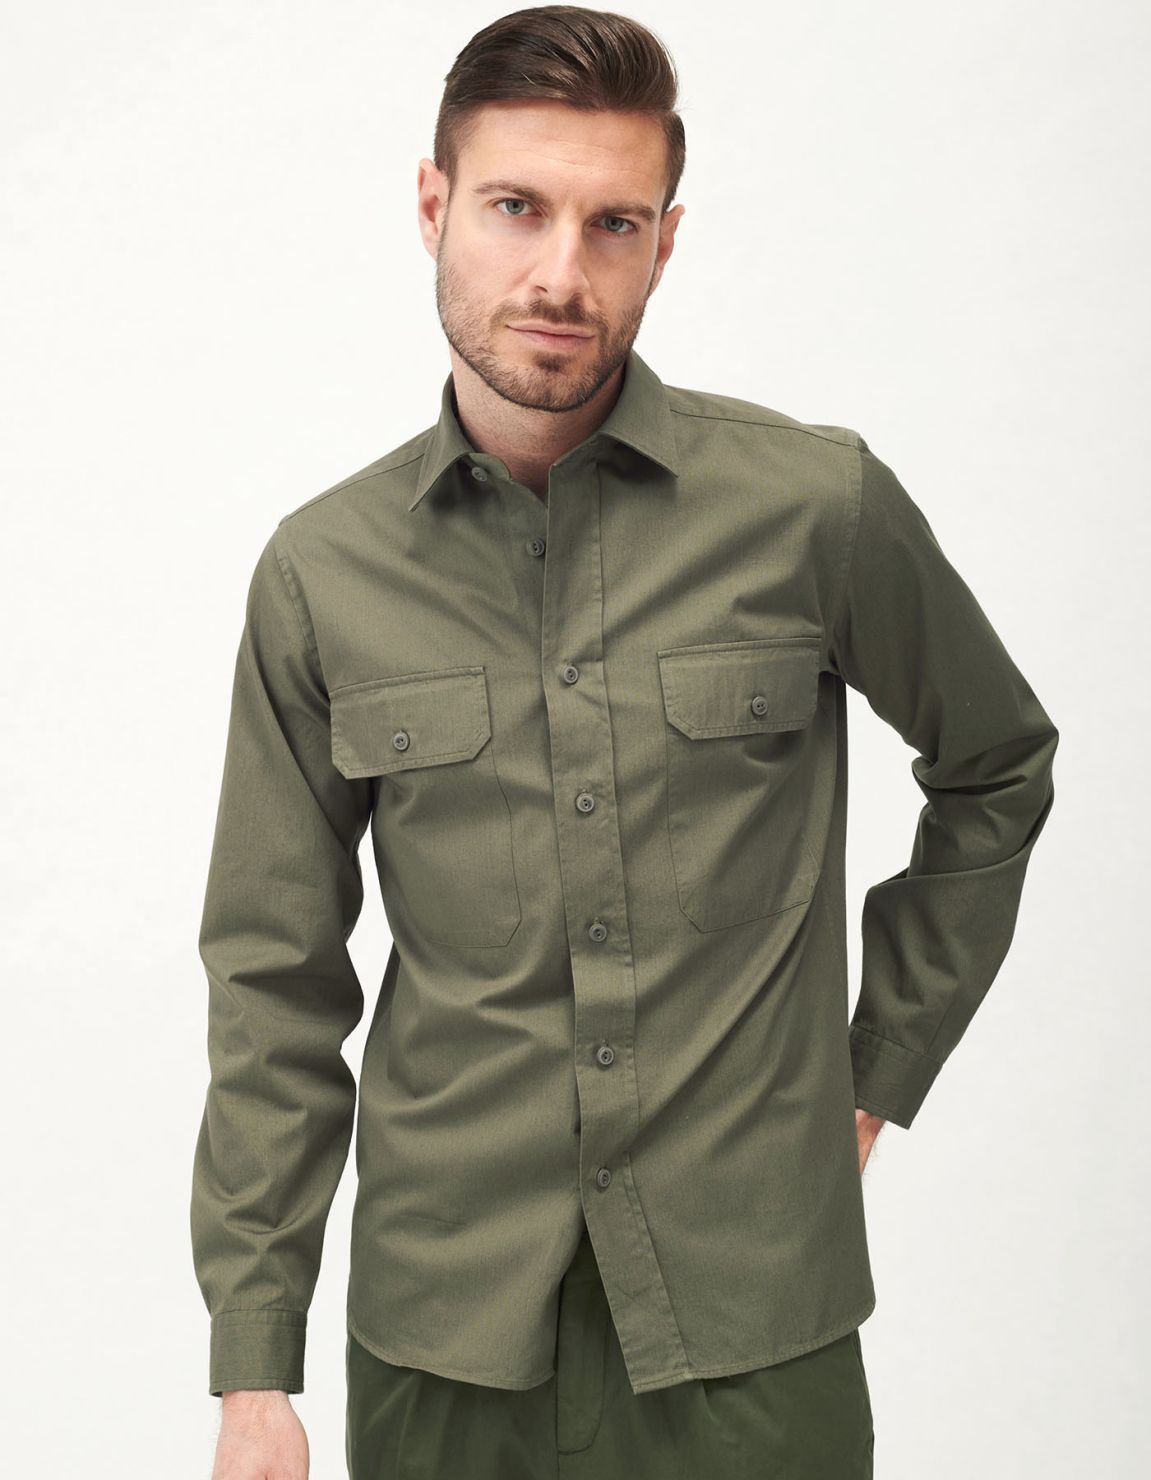 Army Green Gabardine Solid colour Shirt Collar small spread Tailor Custom Fit 3